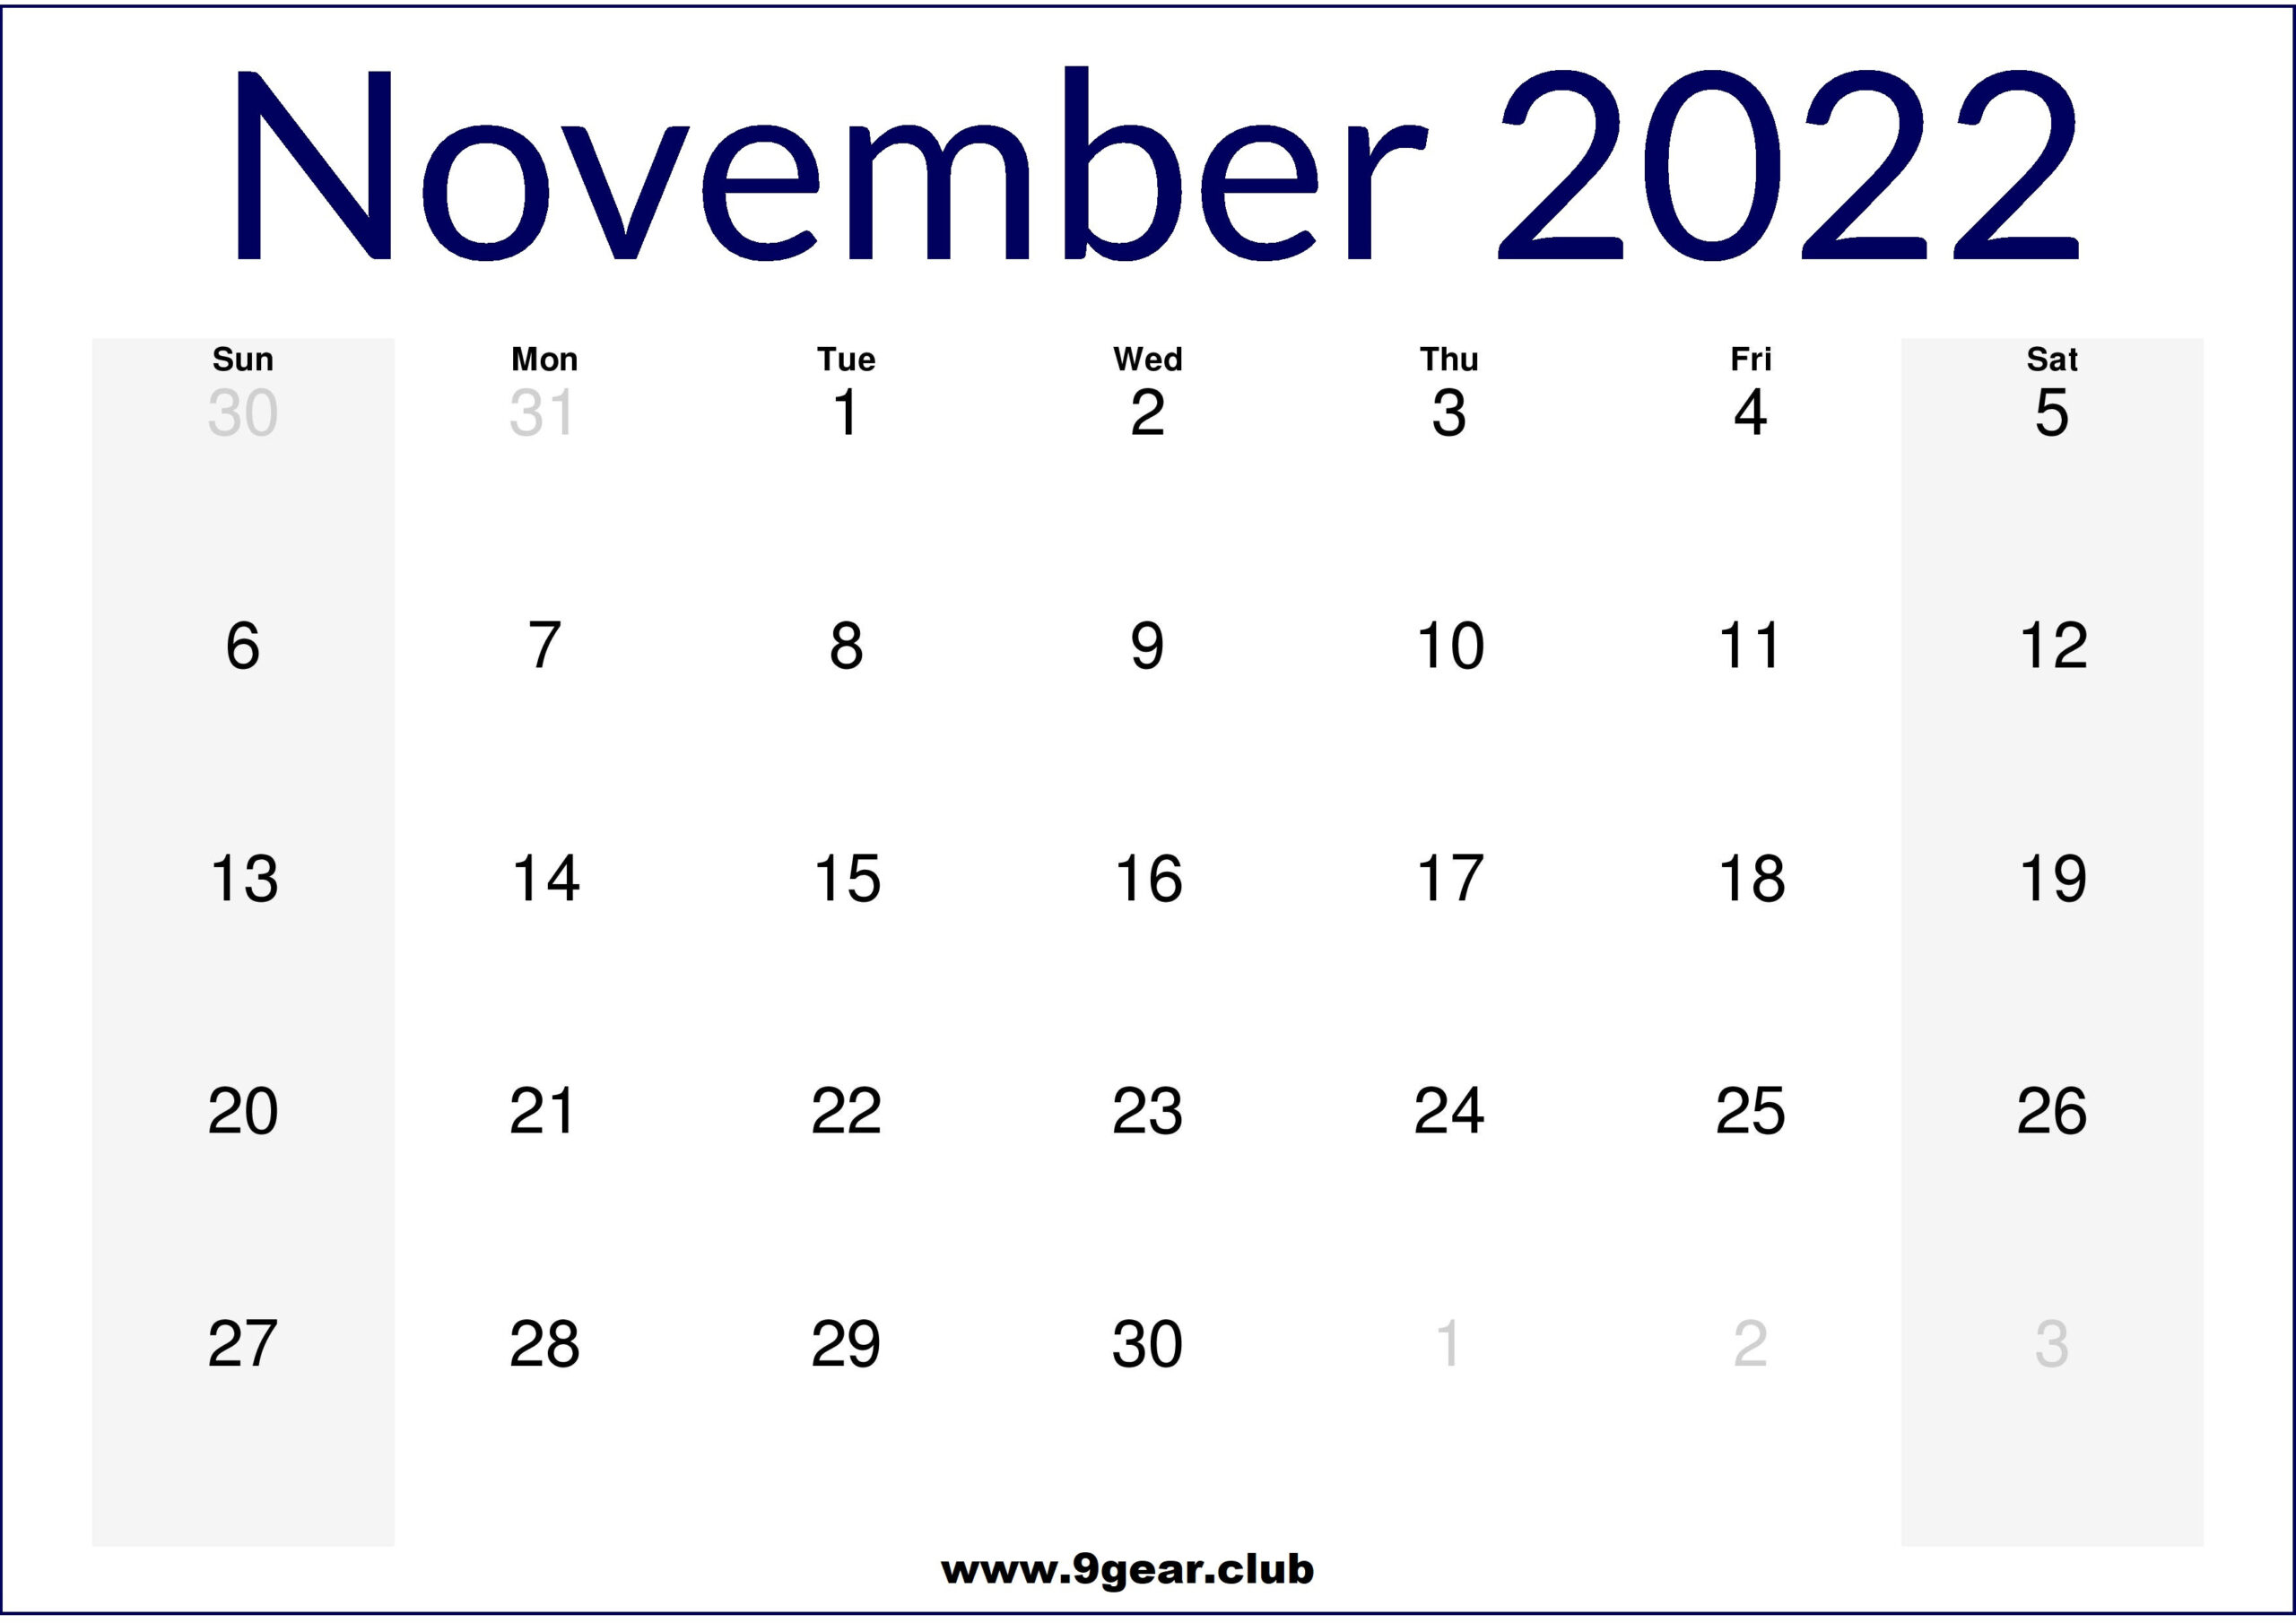 November 2022 Us Calendar Printable - Printable Calendars 2022  November 2022 To June 2022 Calendar